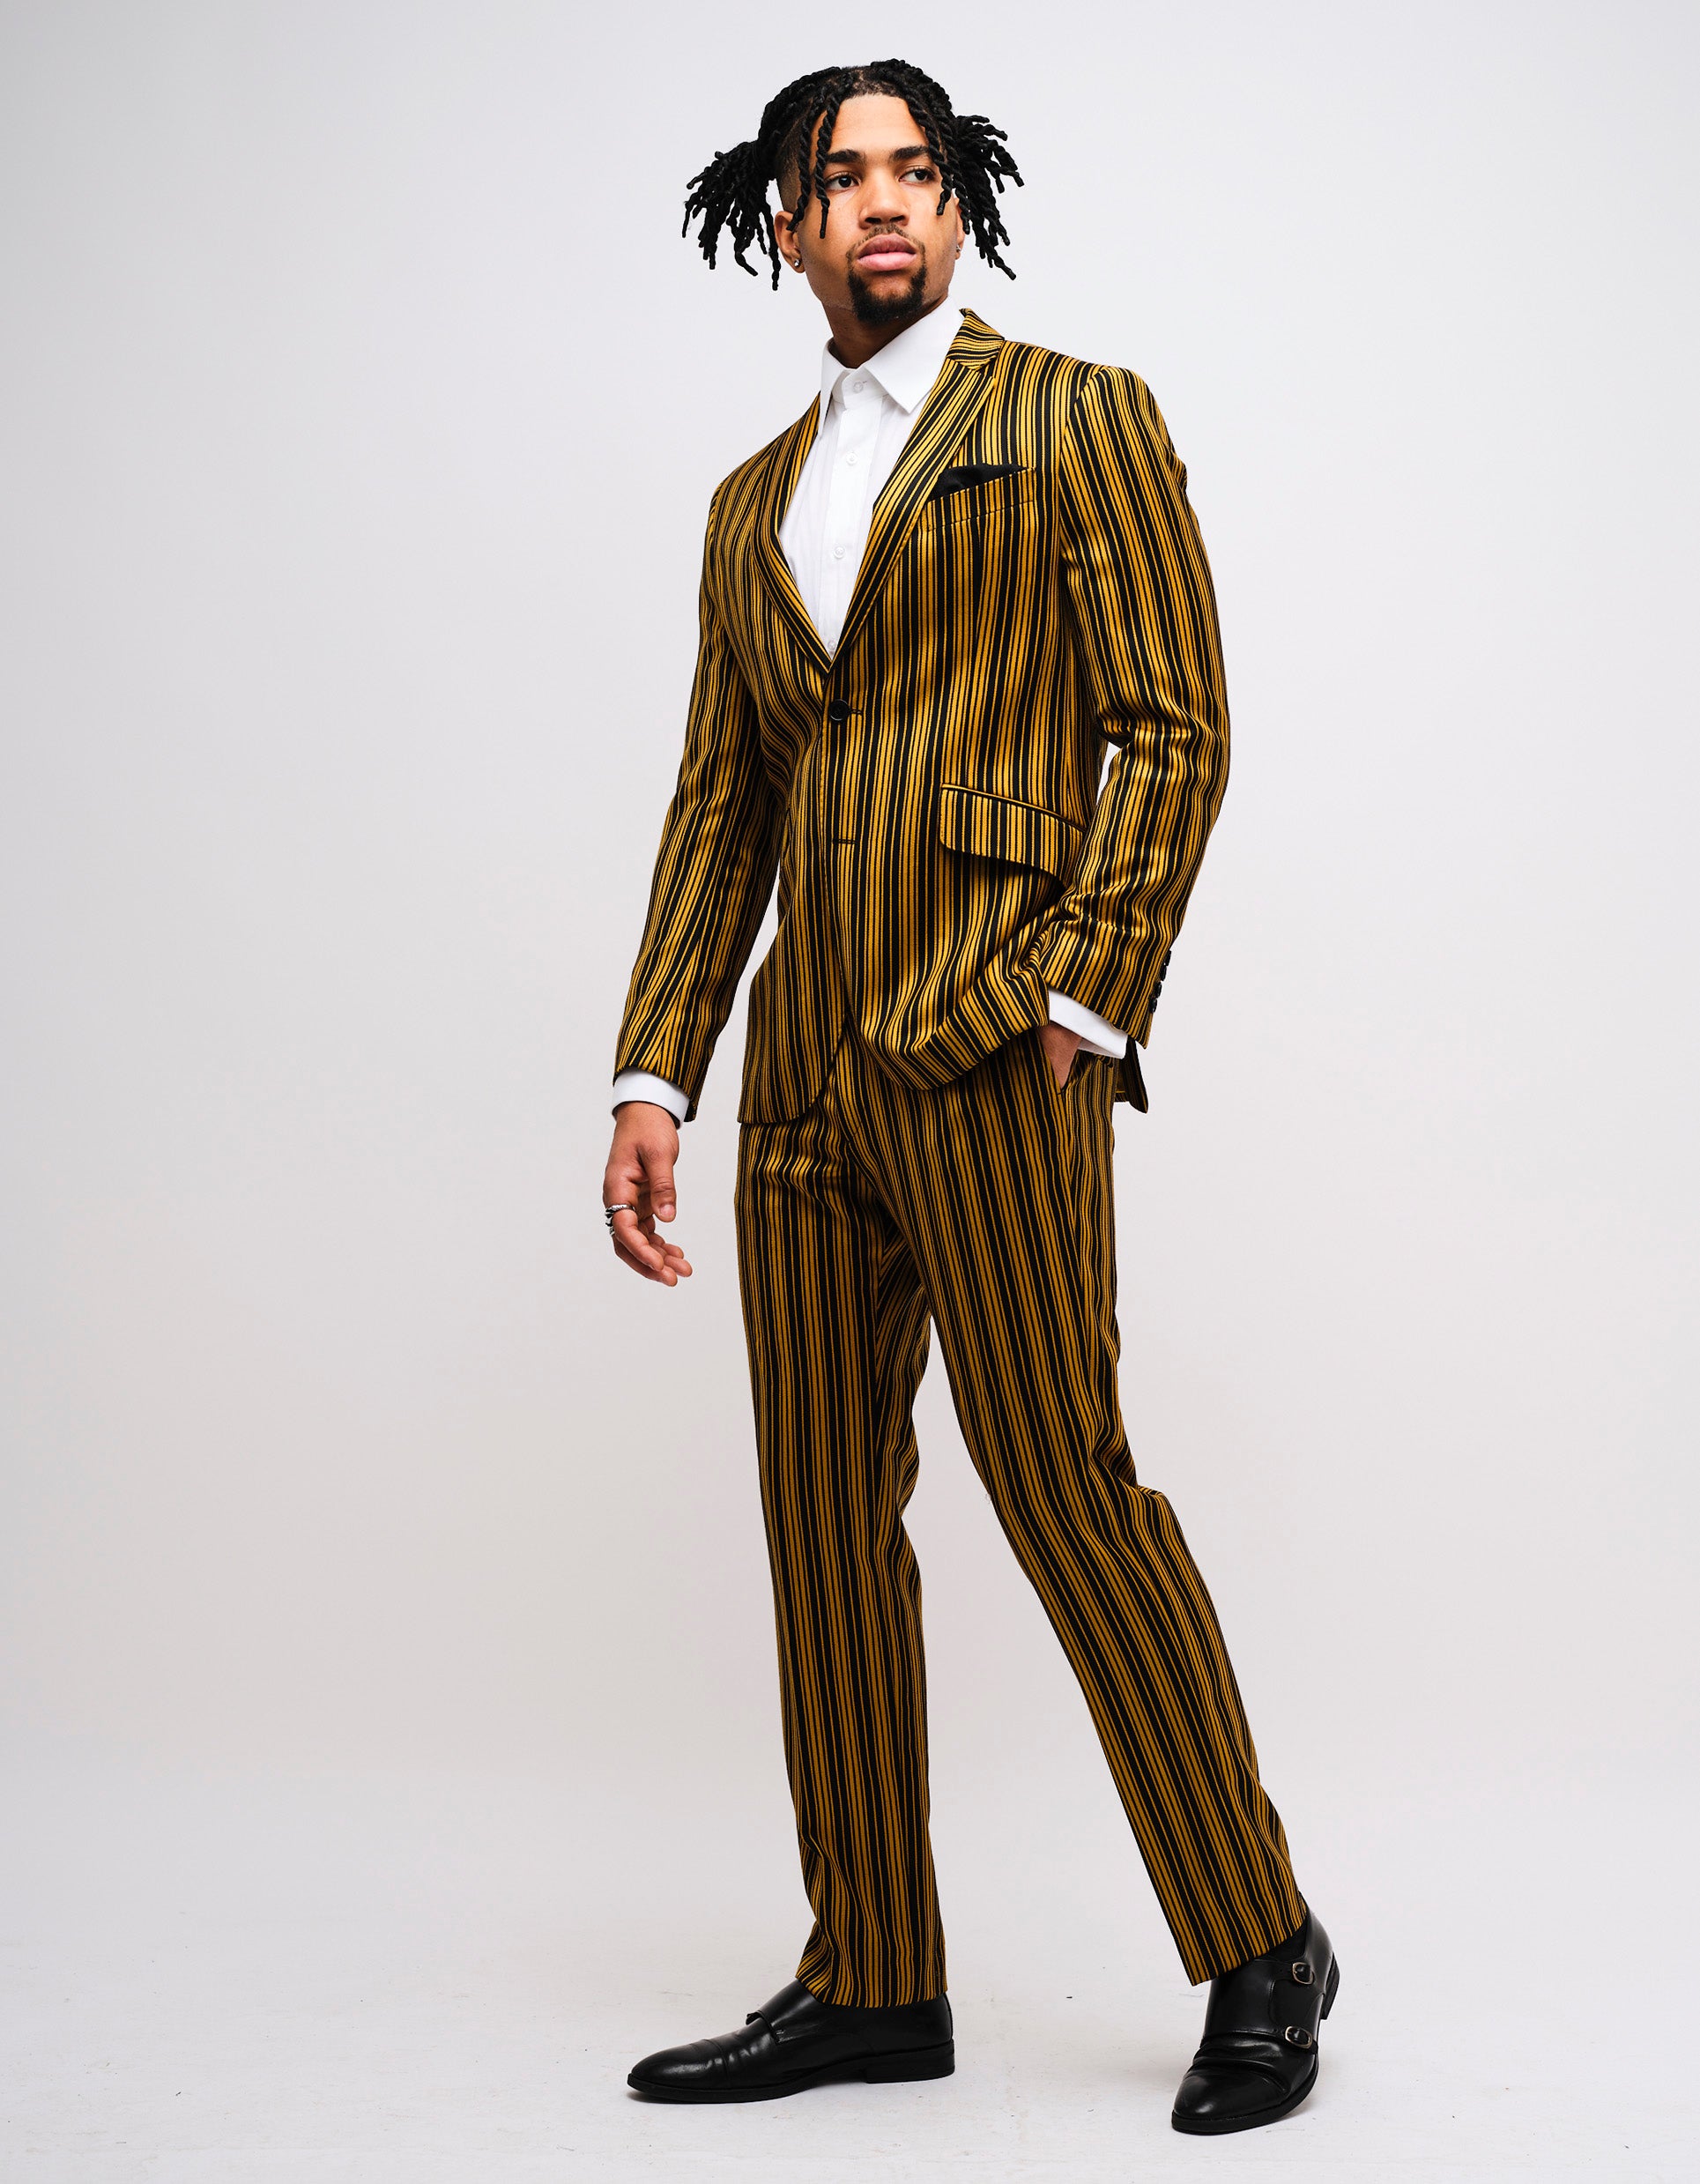 When Should A Man Buy A Pinstripe Suit?